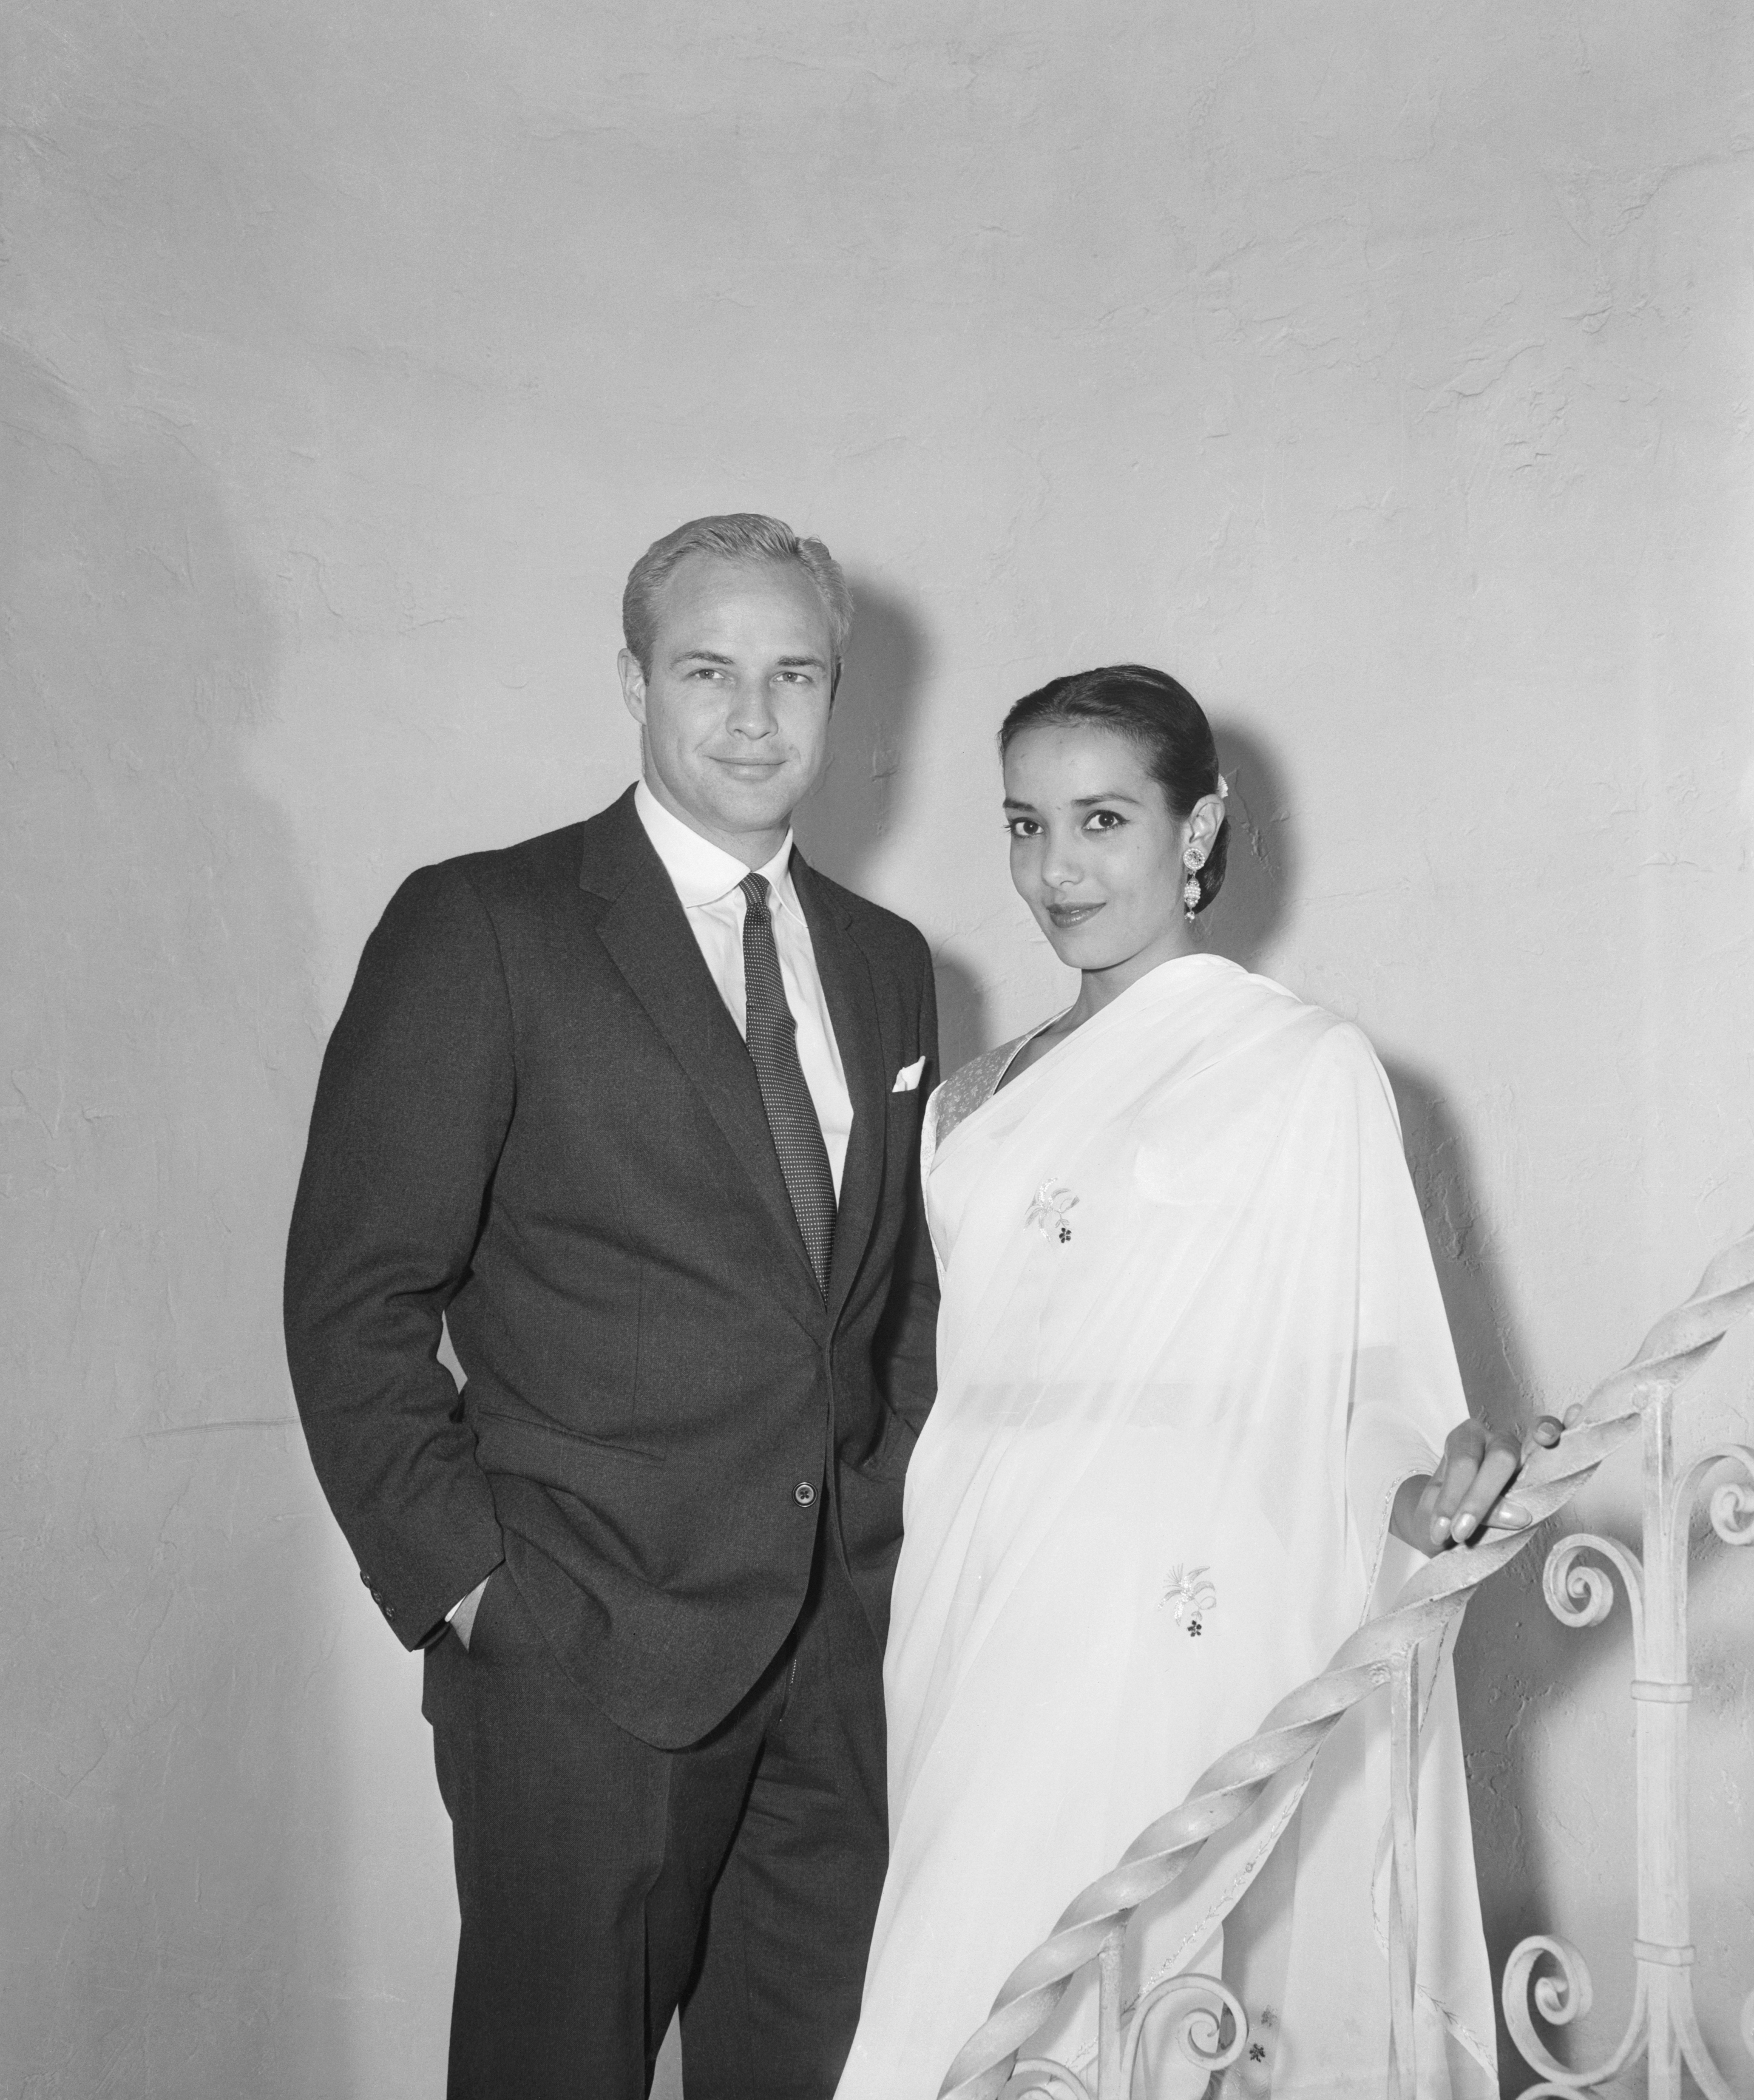 Marlon Brando and Anna Kashfi on October 11, 1957 | Source: Getty Images